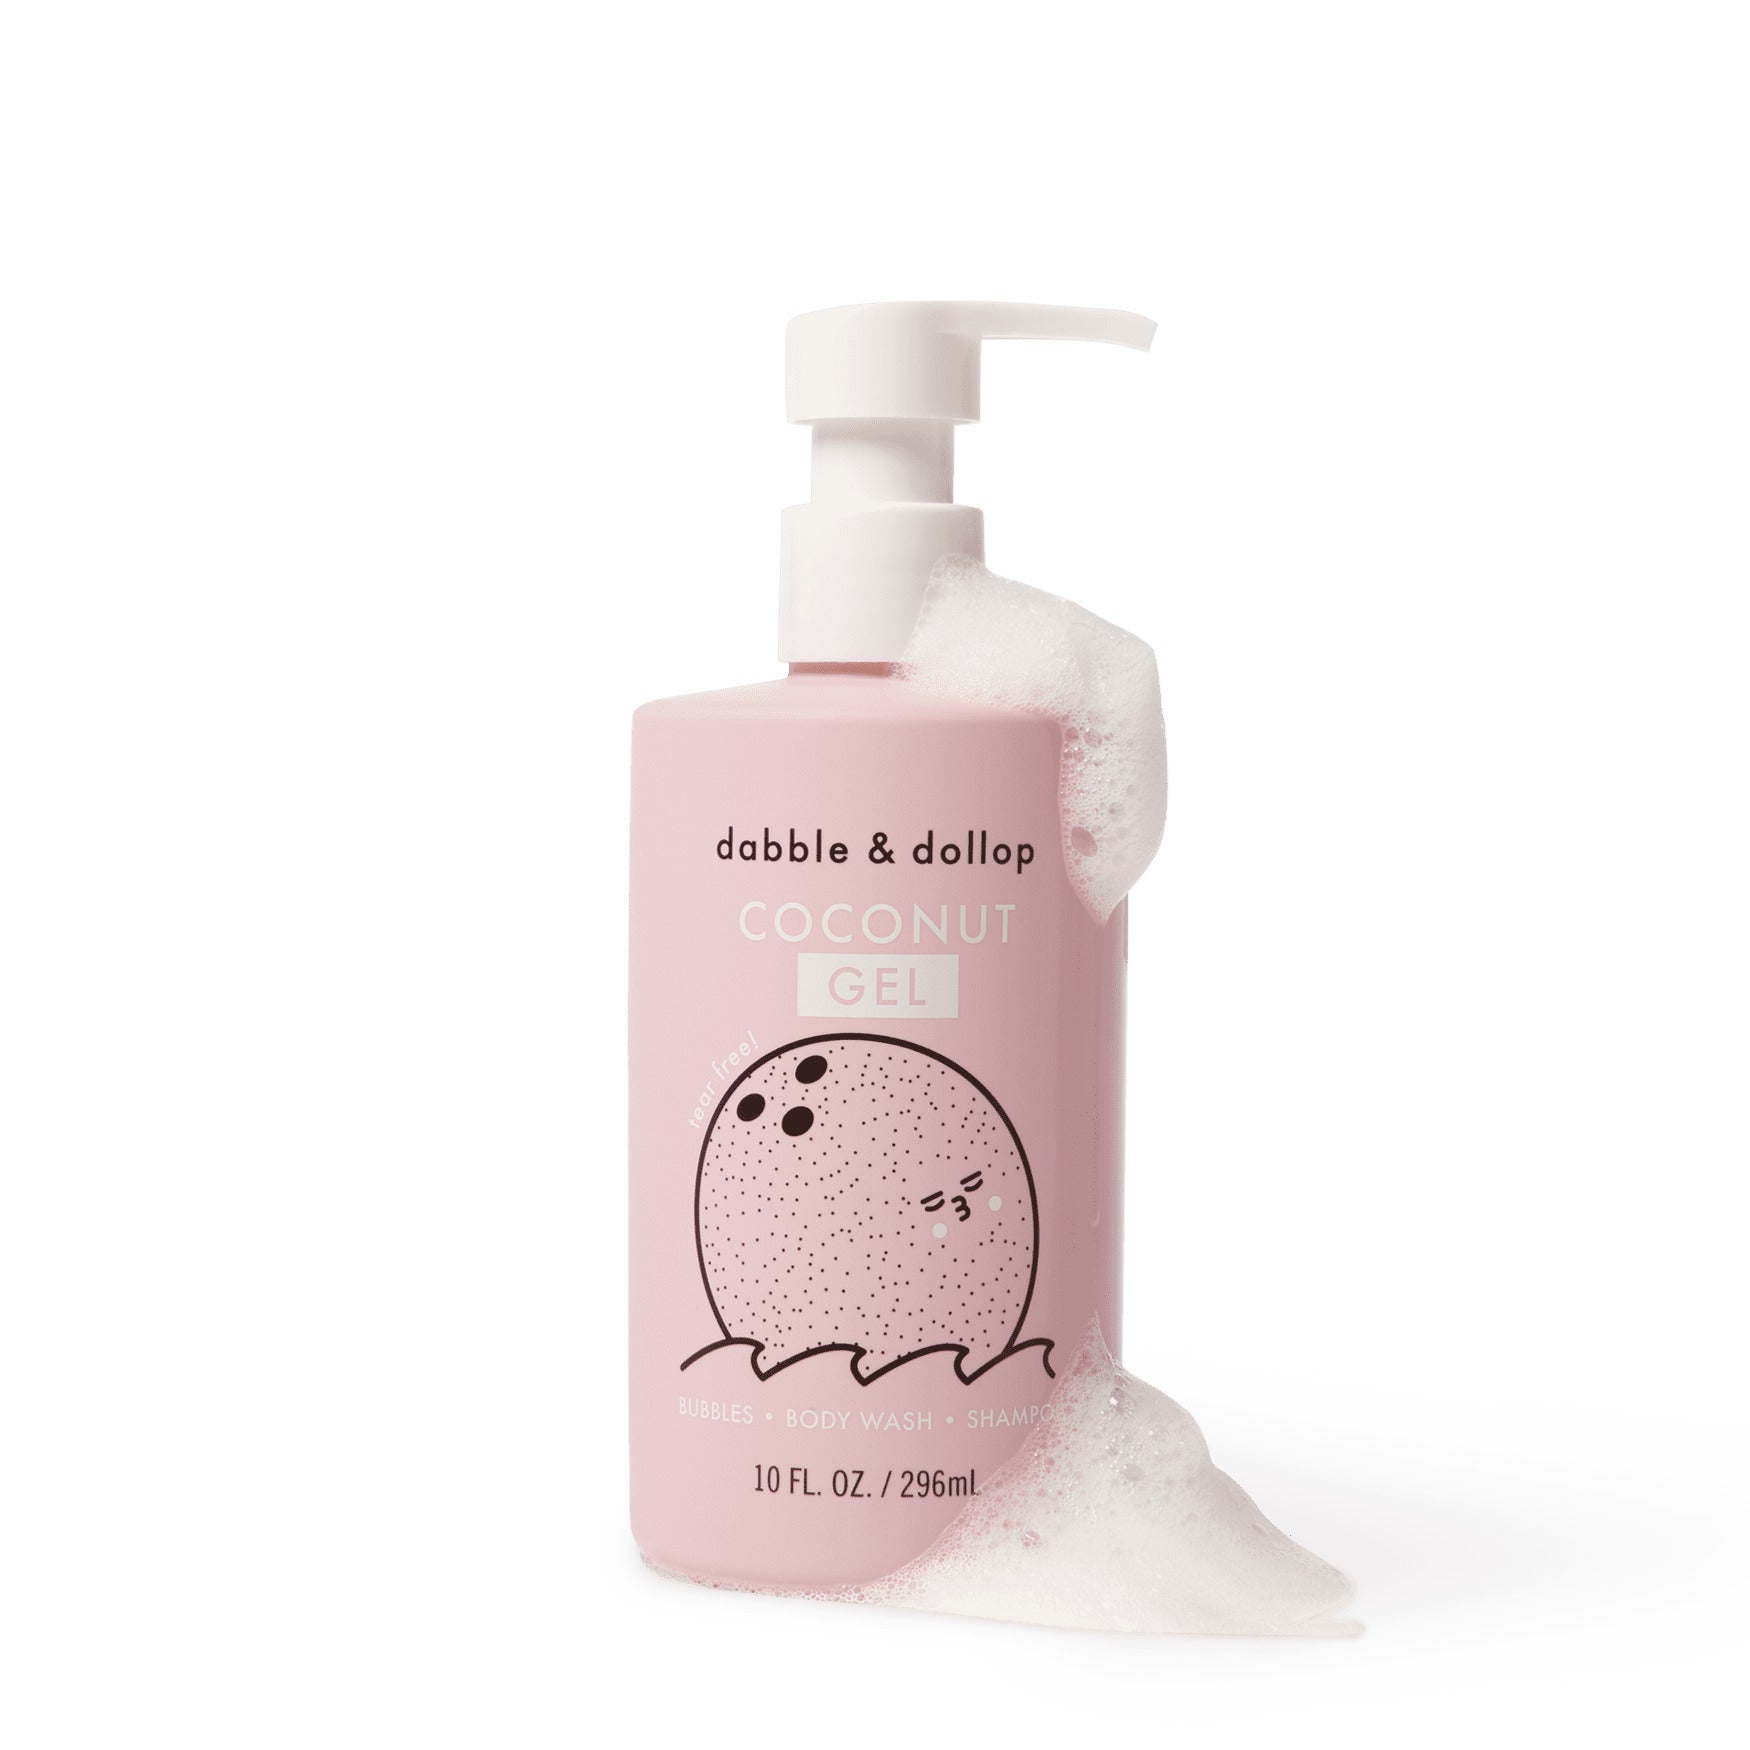 "Batty" for Coconut Shampoo & Body Wash